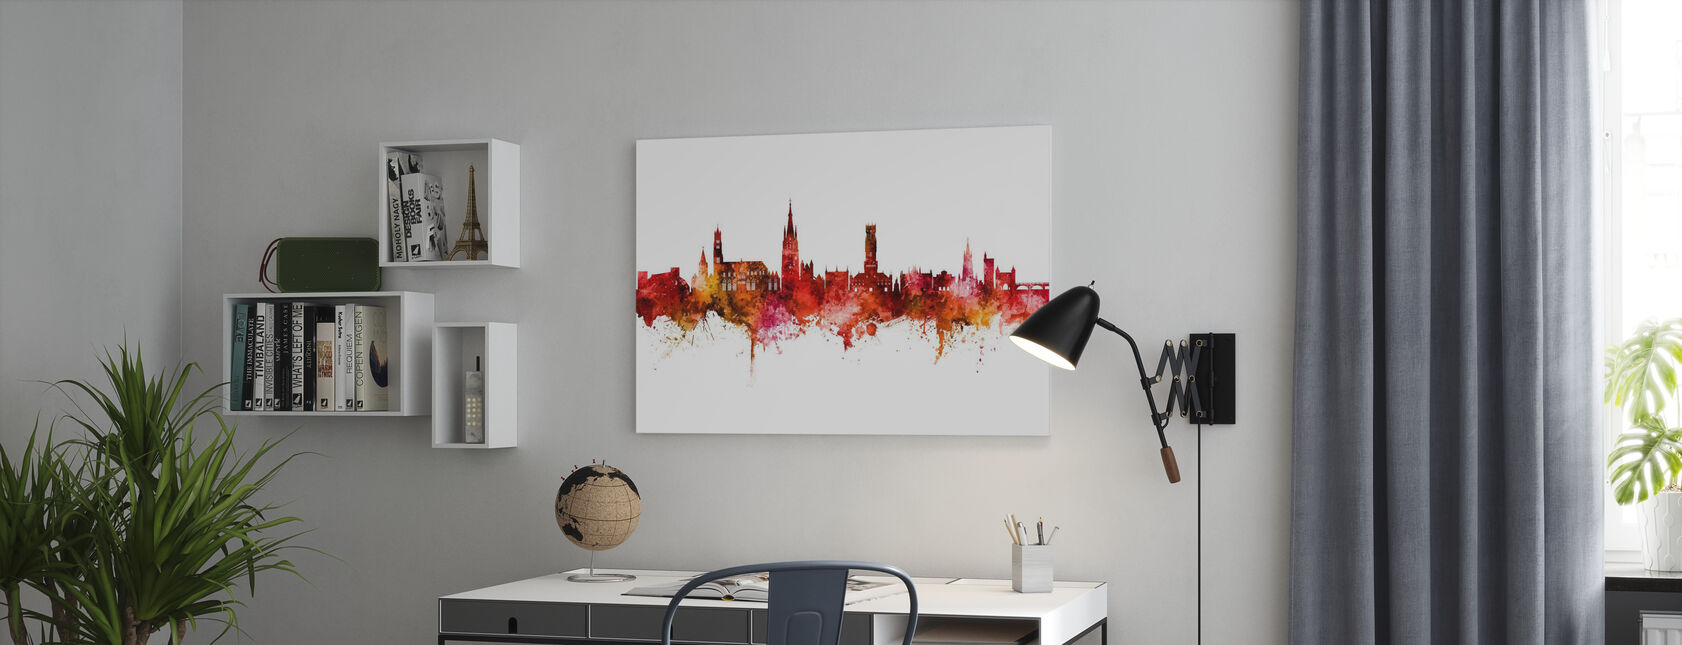 Bruges Belgium Skyline - Canvas print - Office